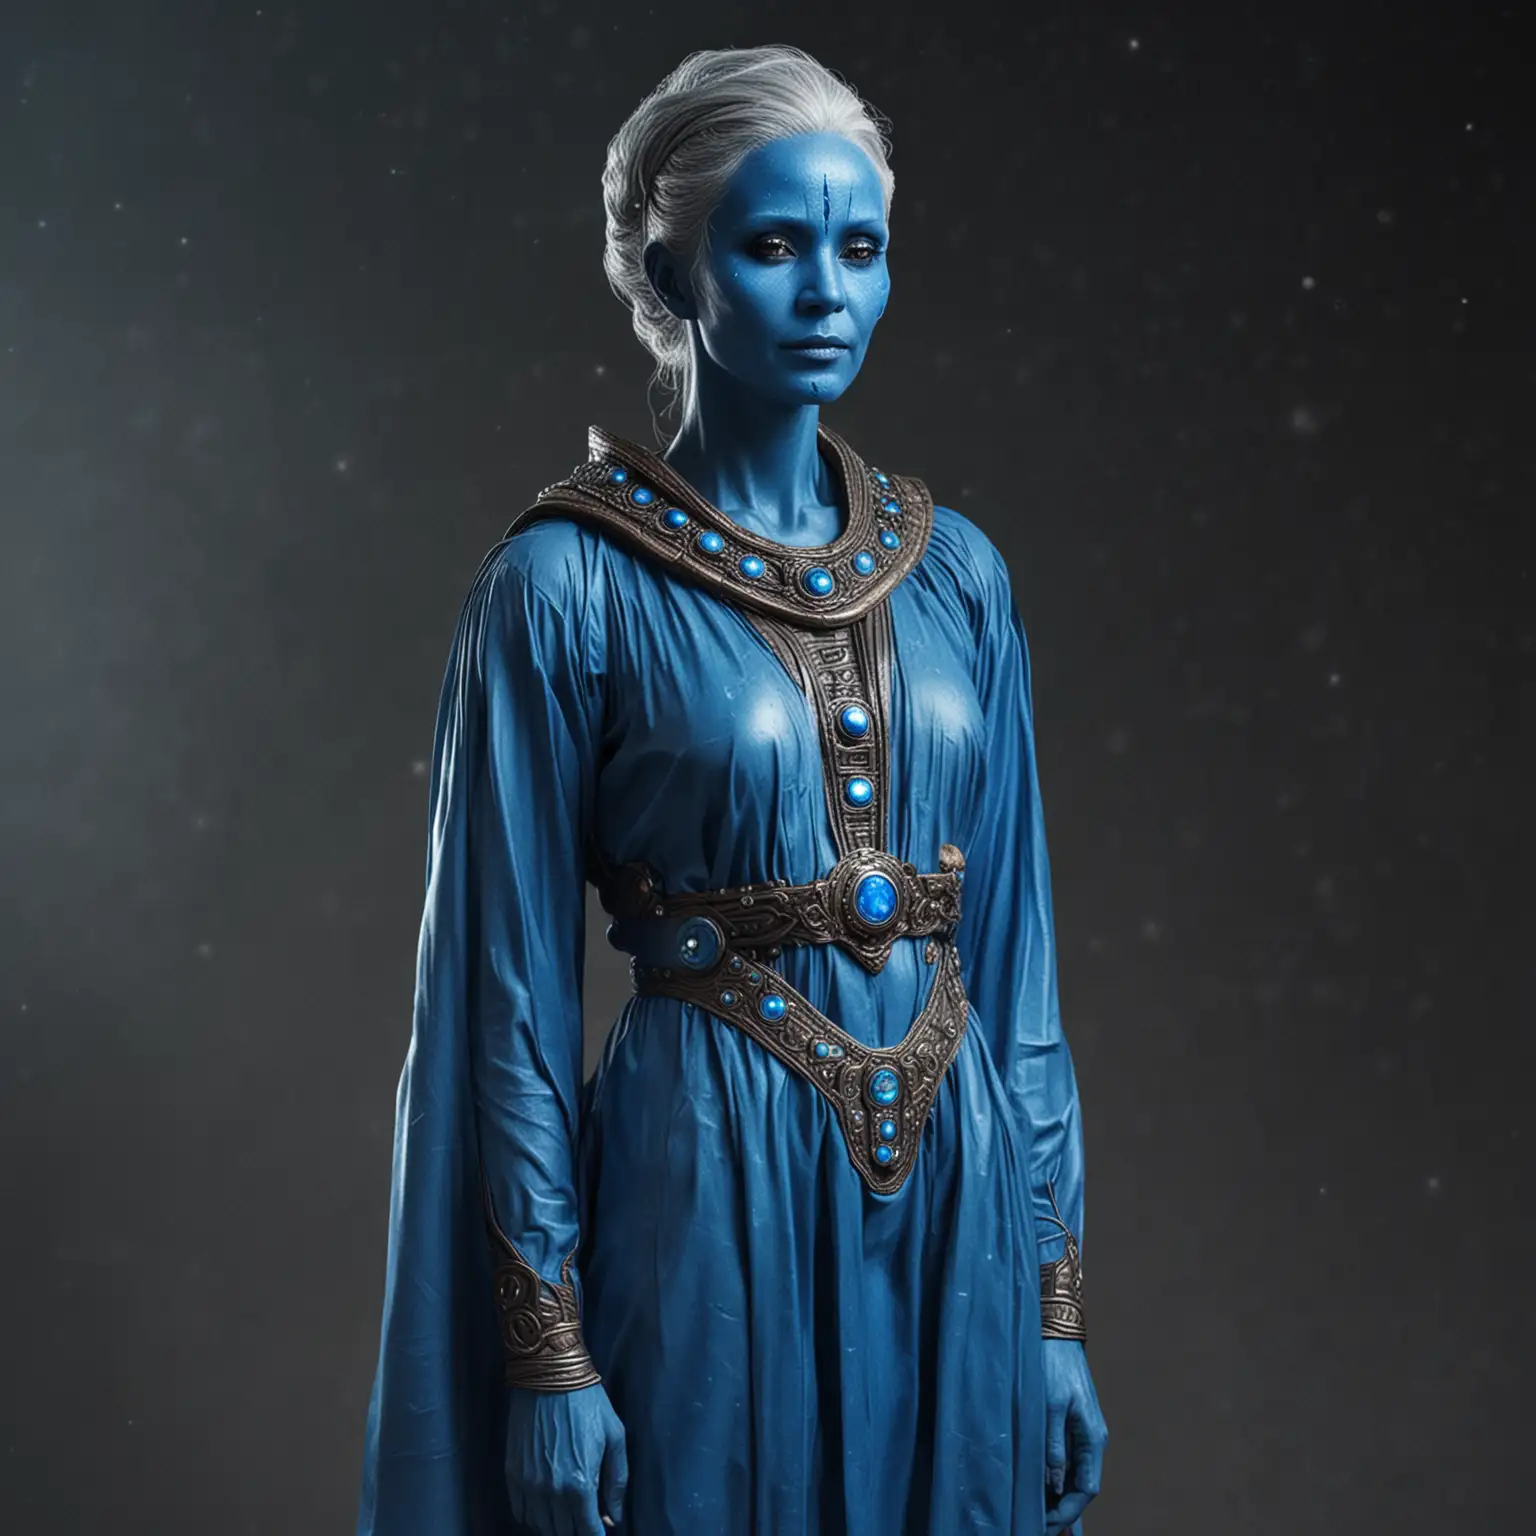 blue skinned galactic andromedan female in shining blue robe